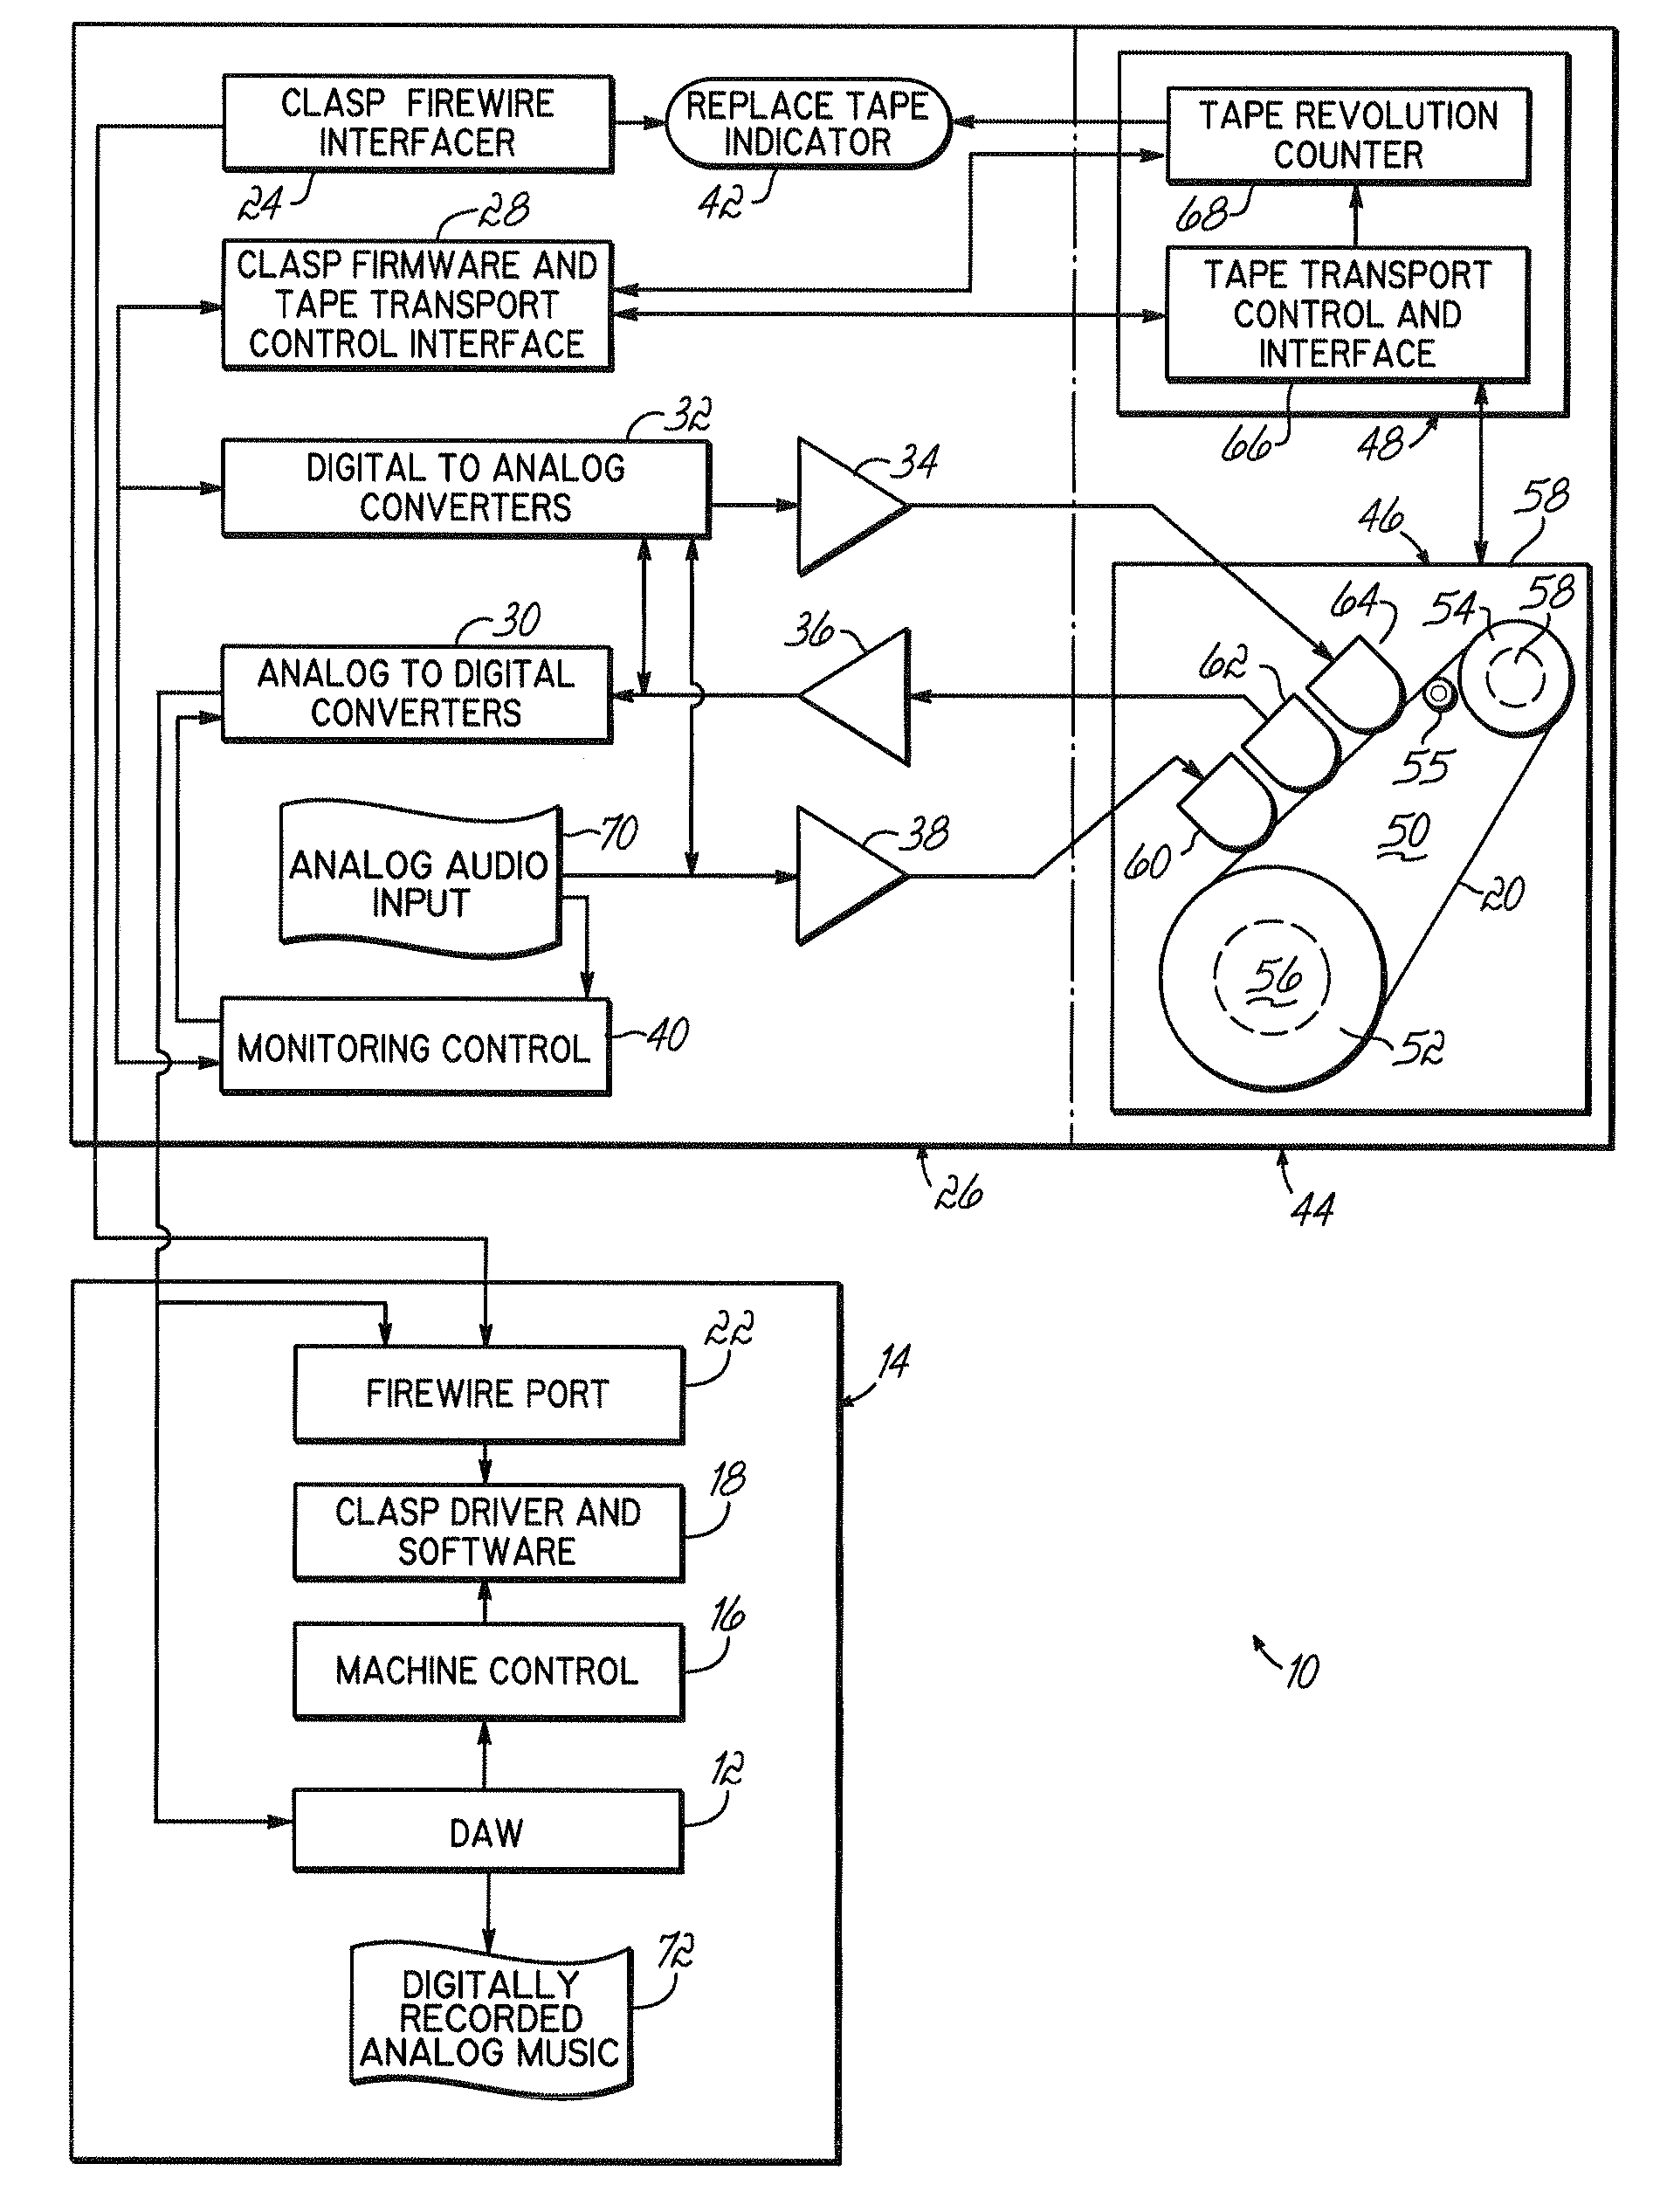 Closed loop analog signal processor ("clasp") system